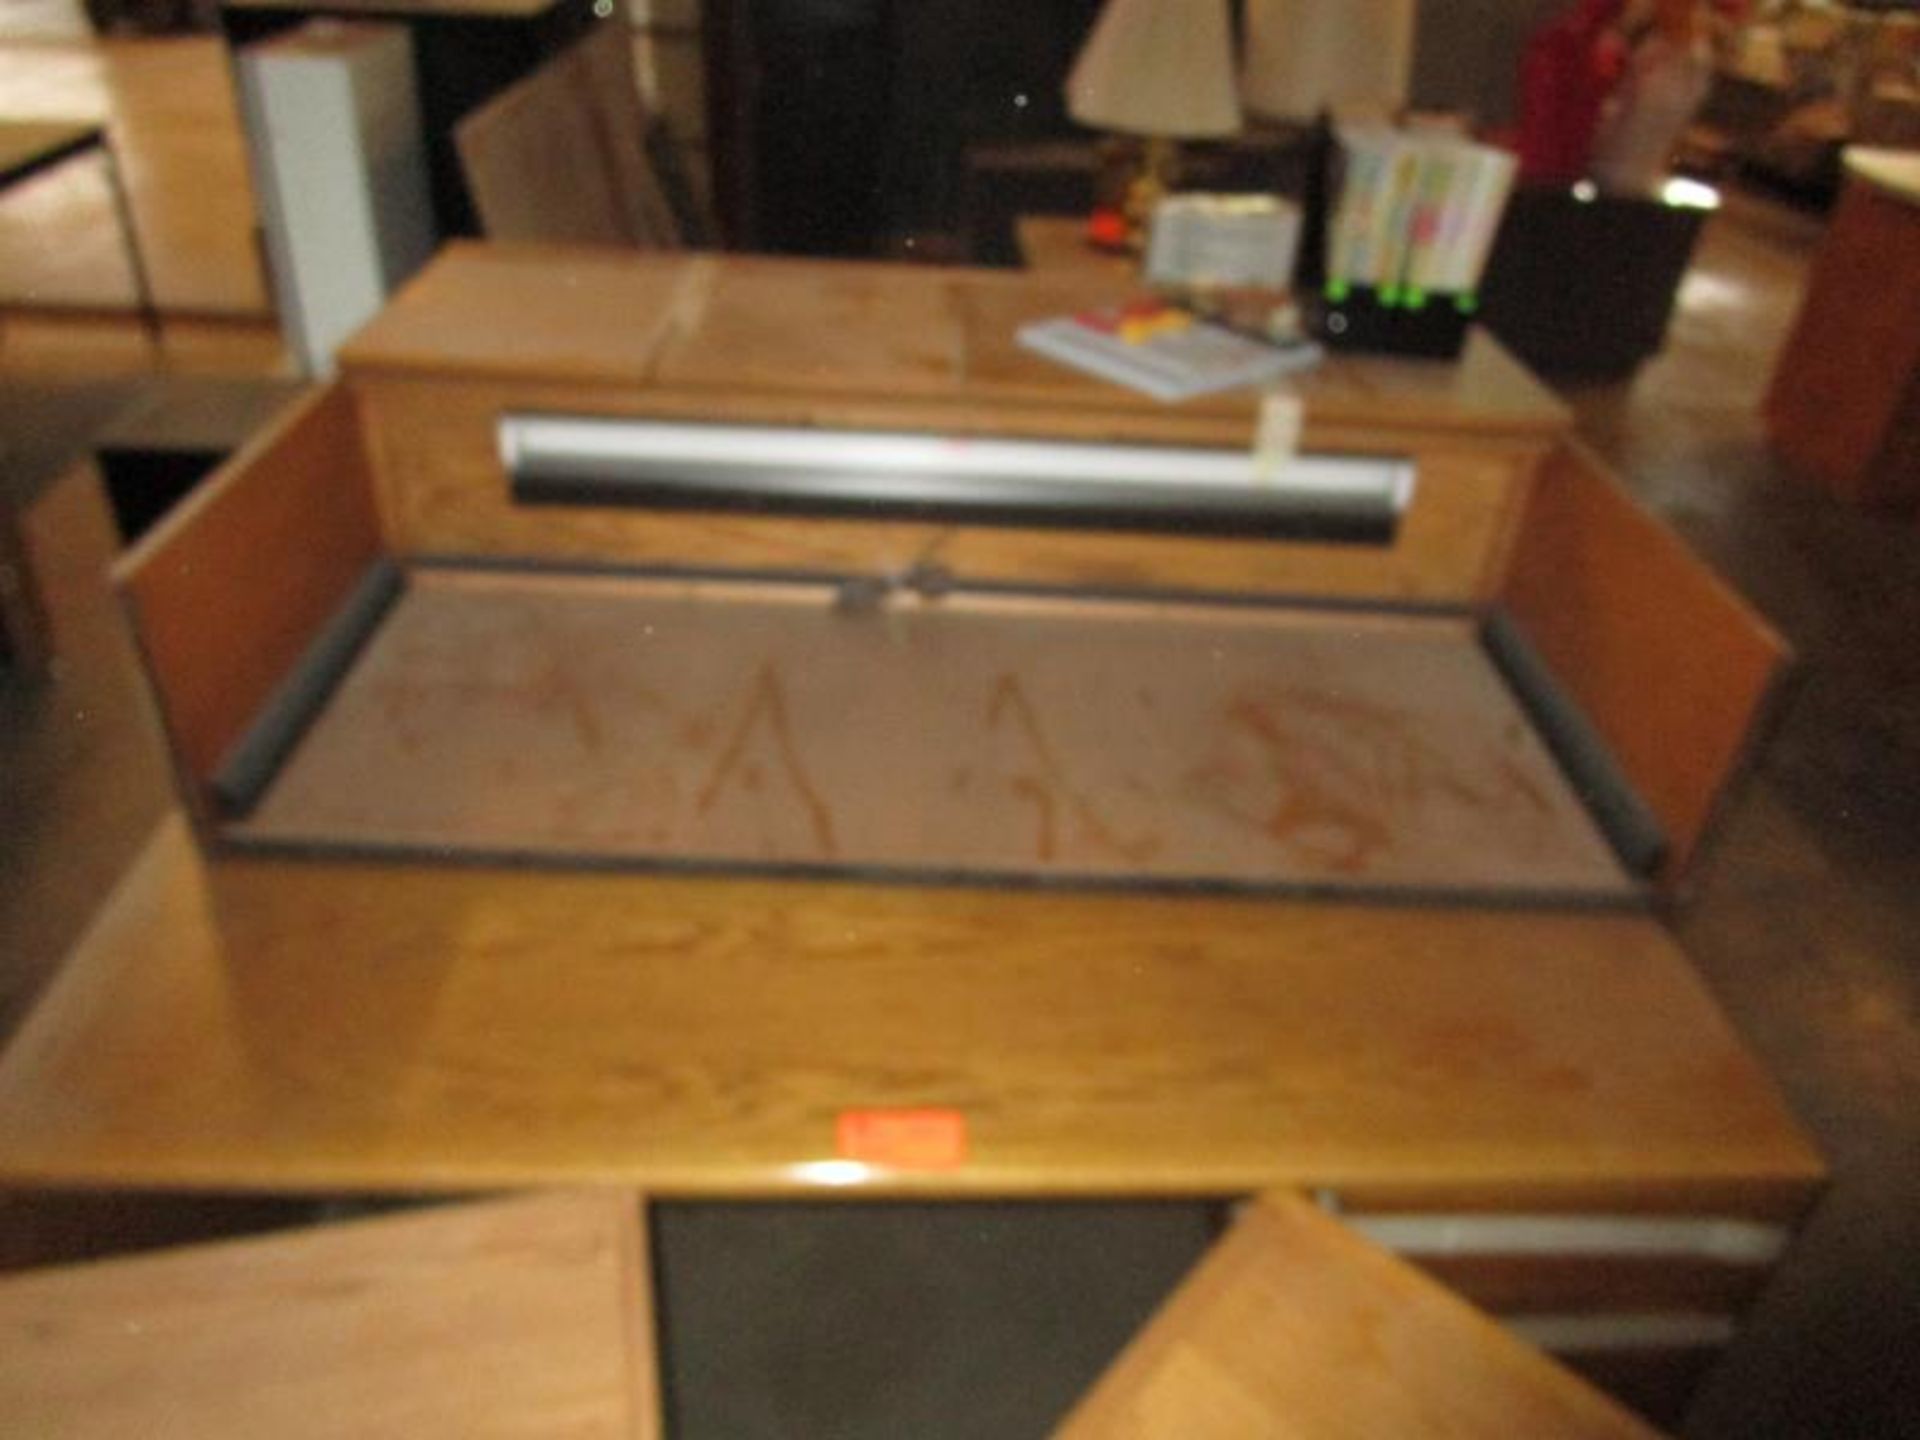 Lot - Matching Desks, Above Storage for 1 Pc., 2 Drawer File, All Laminate Wood - 5pcs Drawer - Image 4 of 5